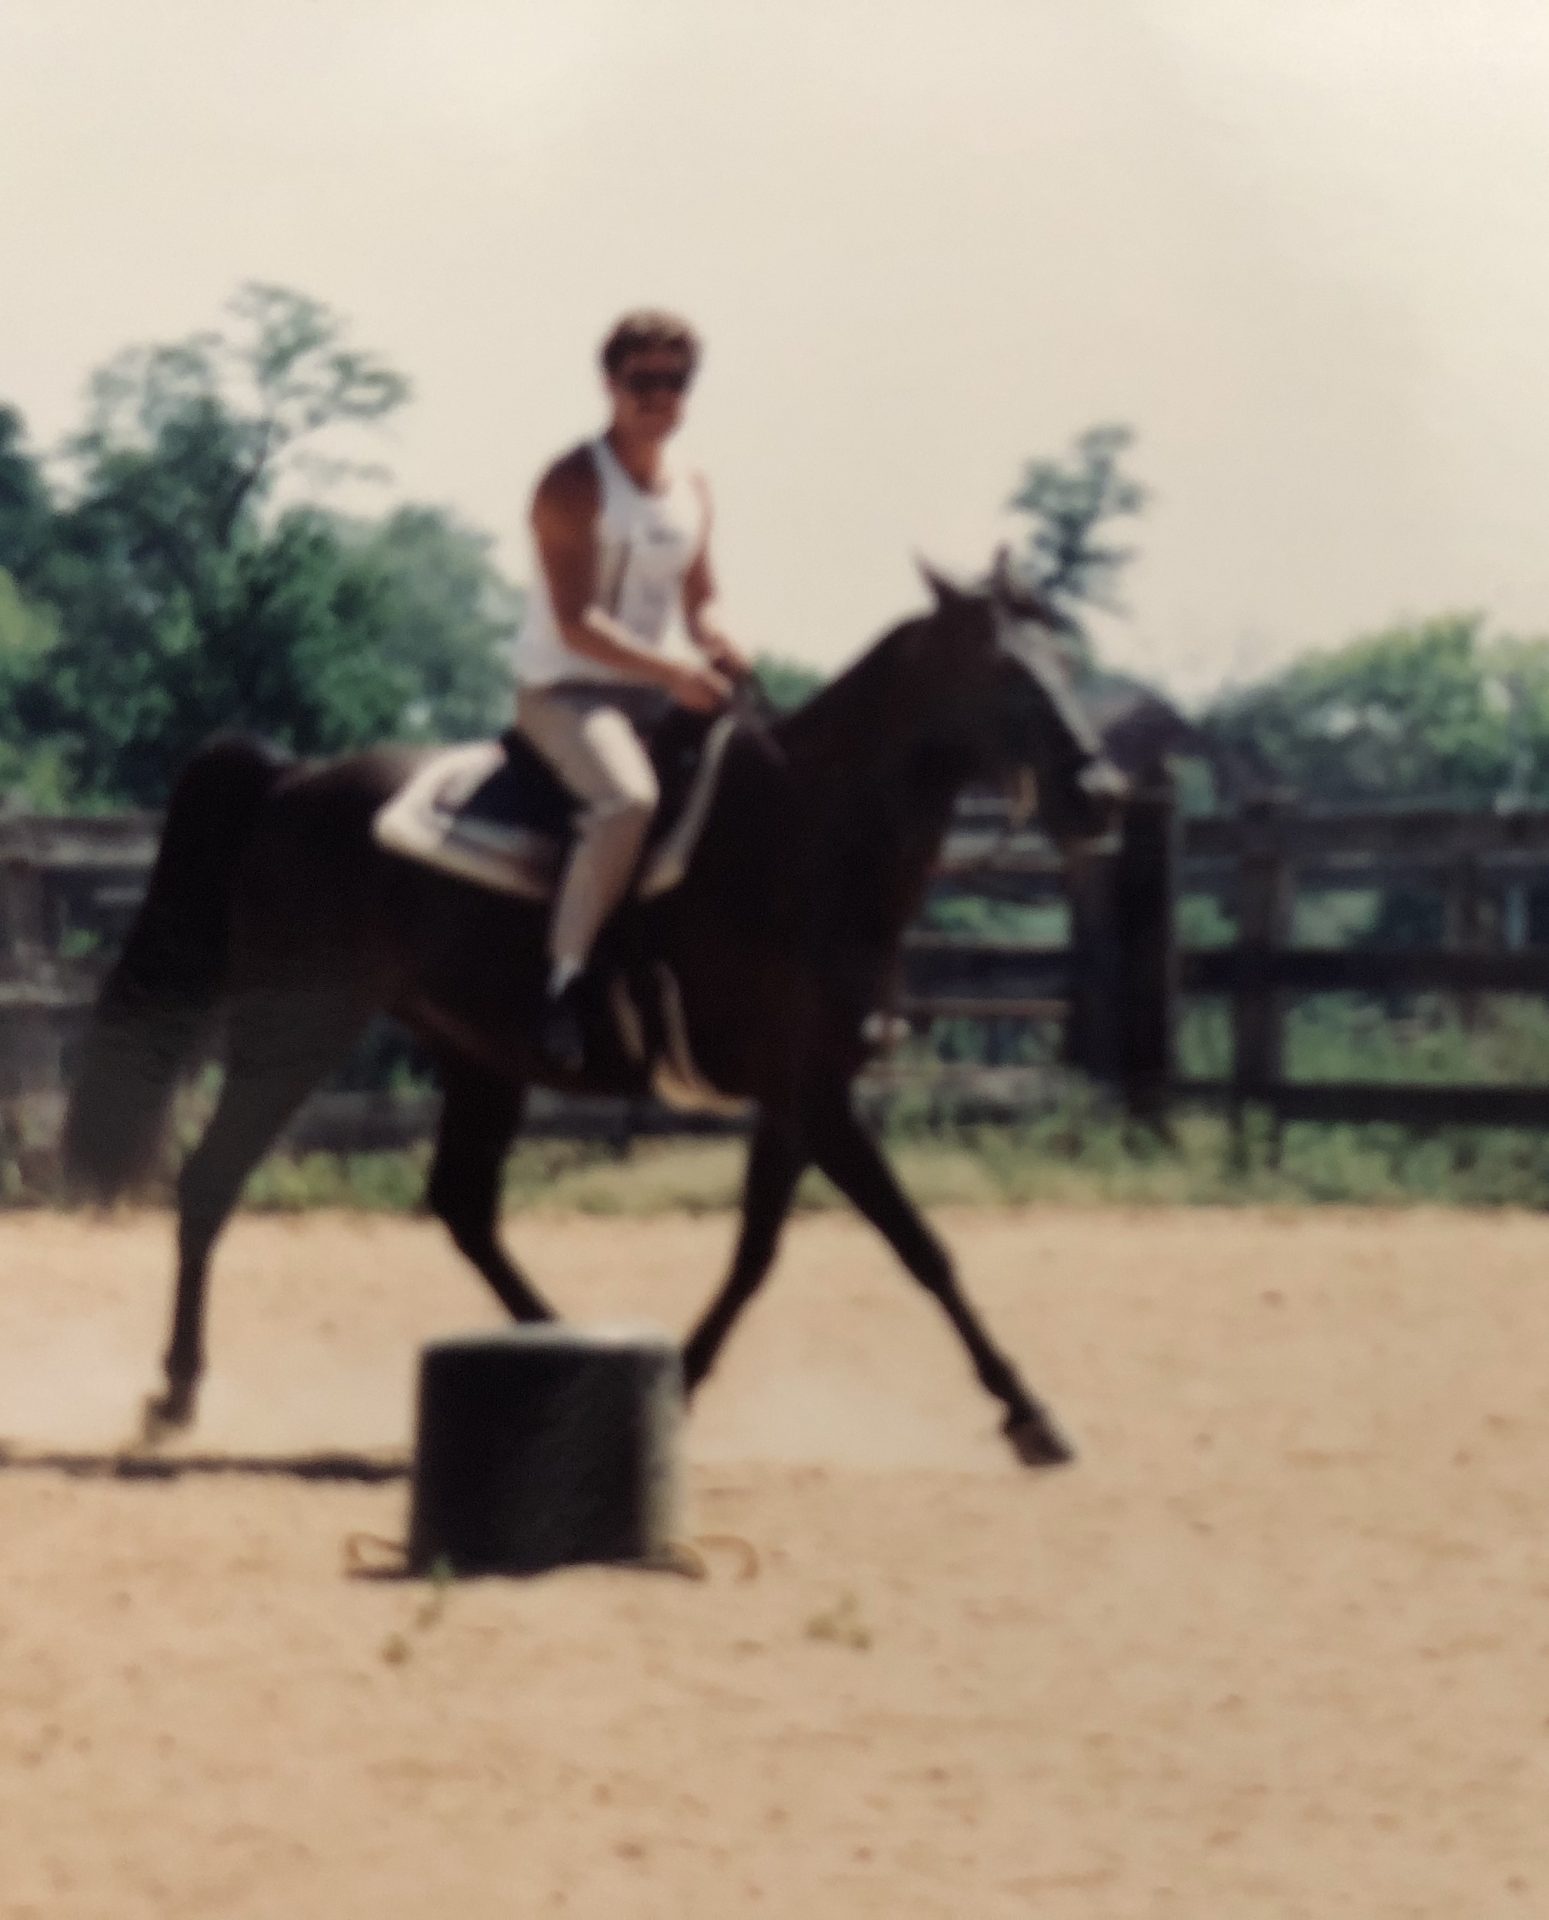 Tom riding Sarah's horse